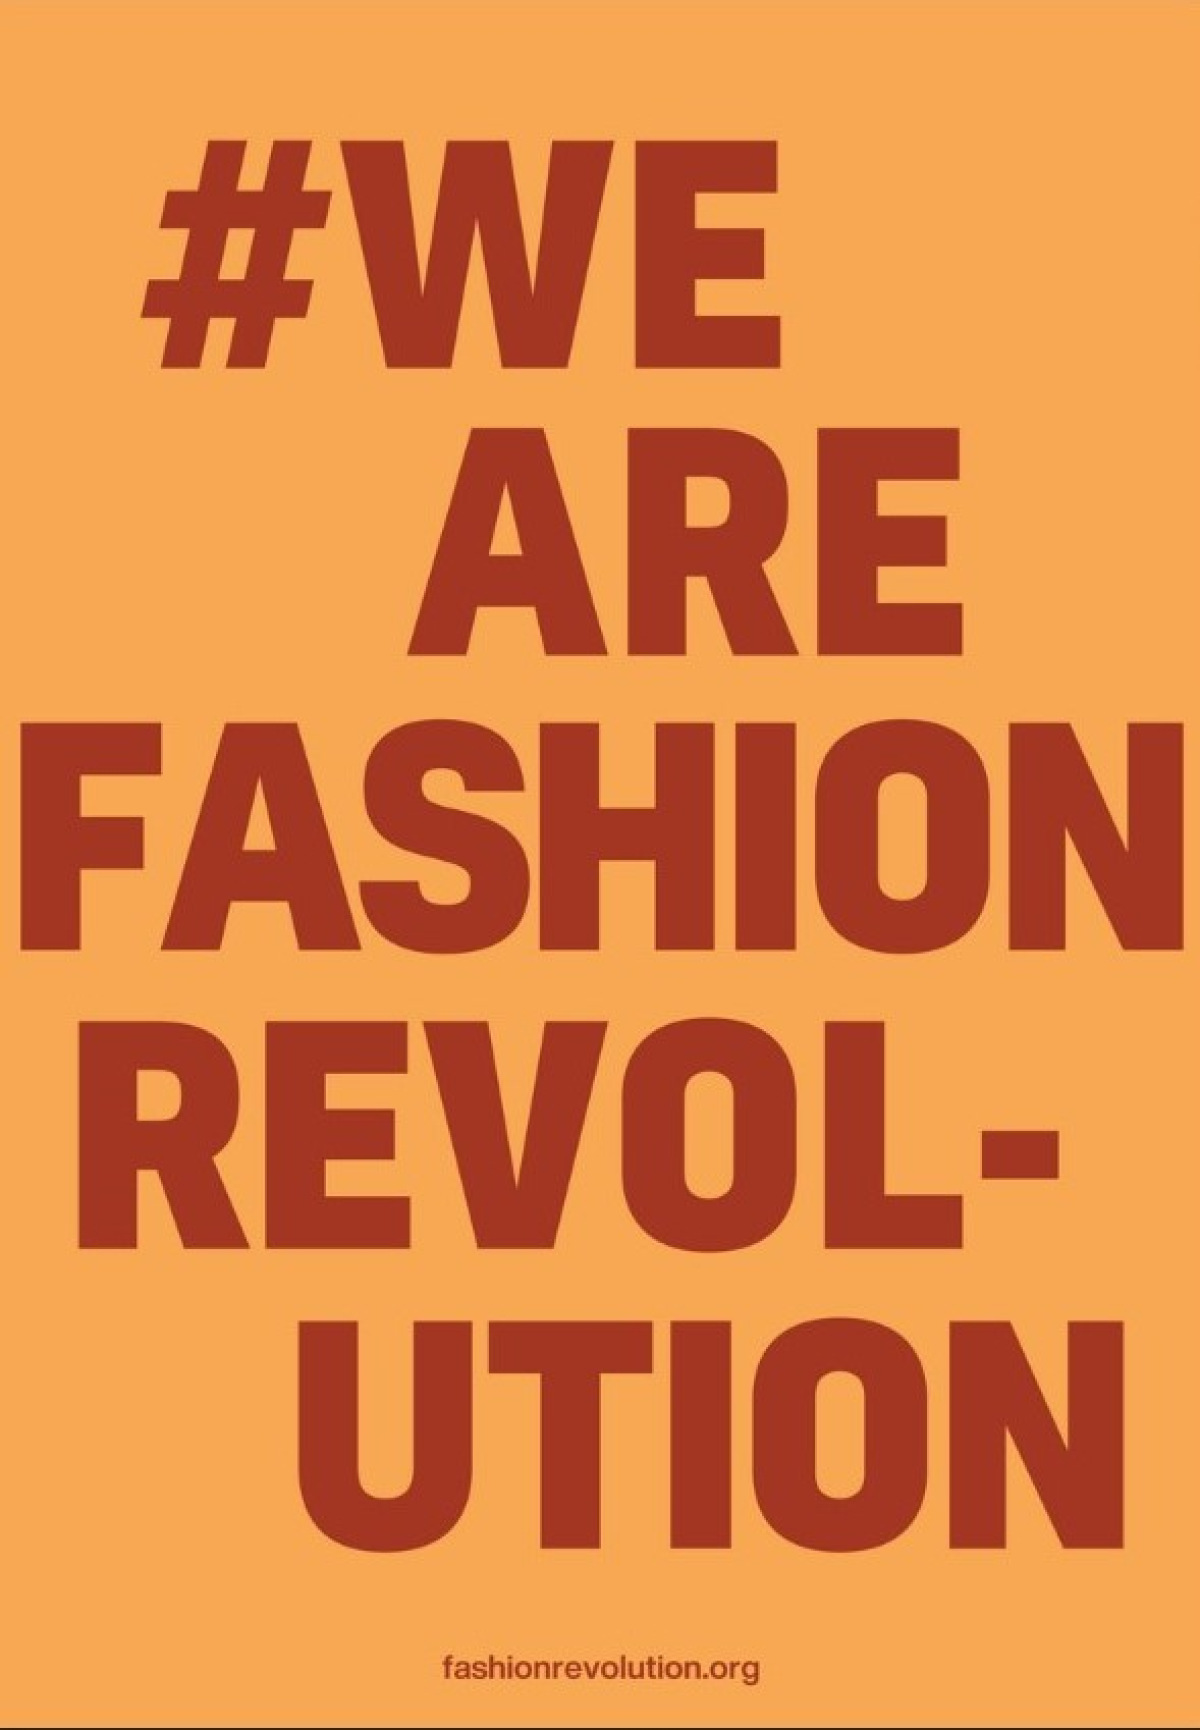 We are Fashion Revolution